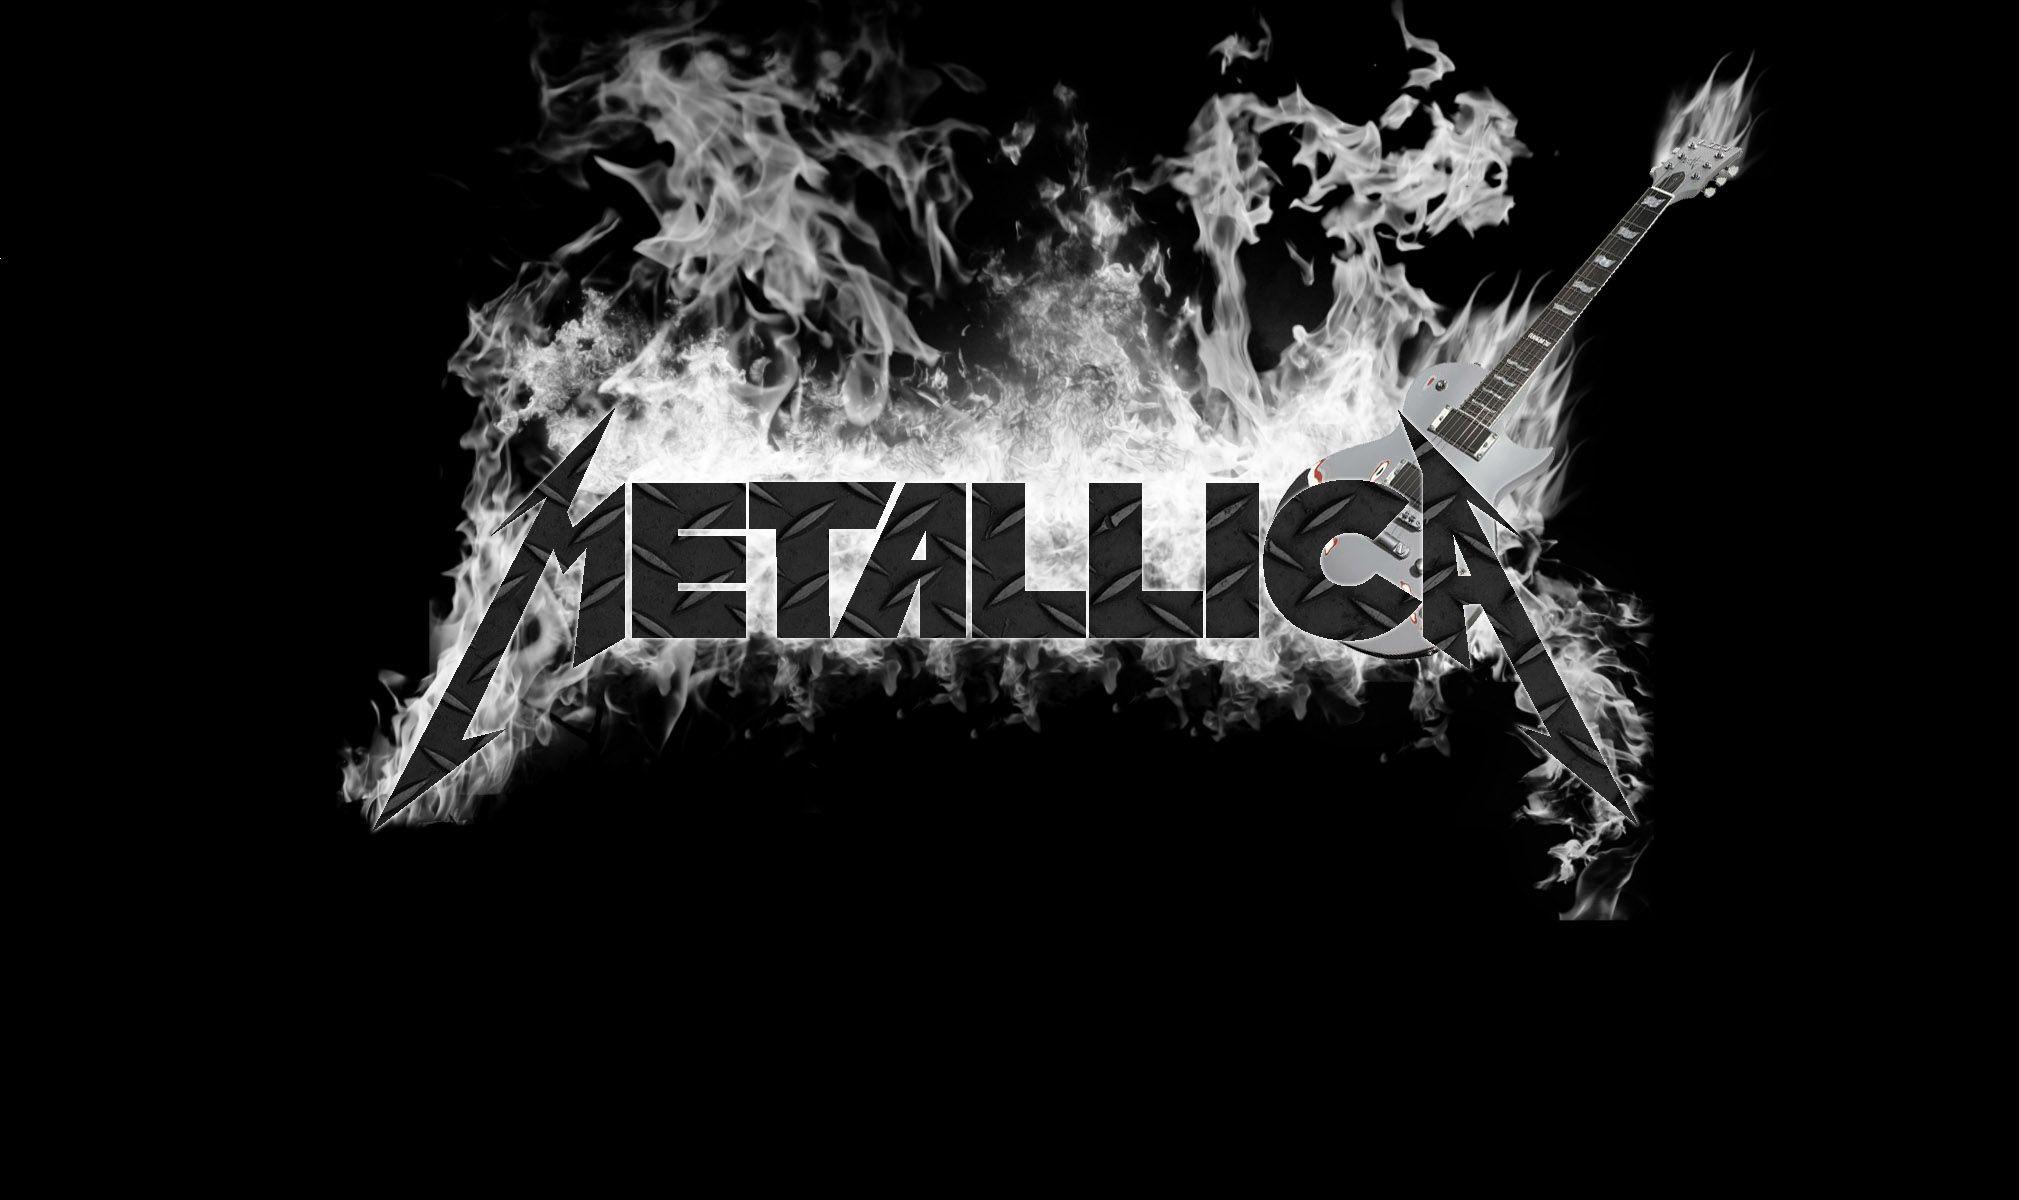 Metallica Smoke Logo Wallpaper Wide or HD. Digital Art Wallpaper